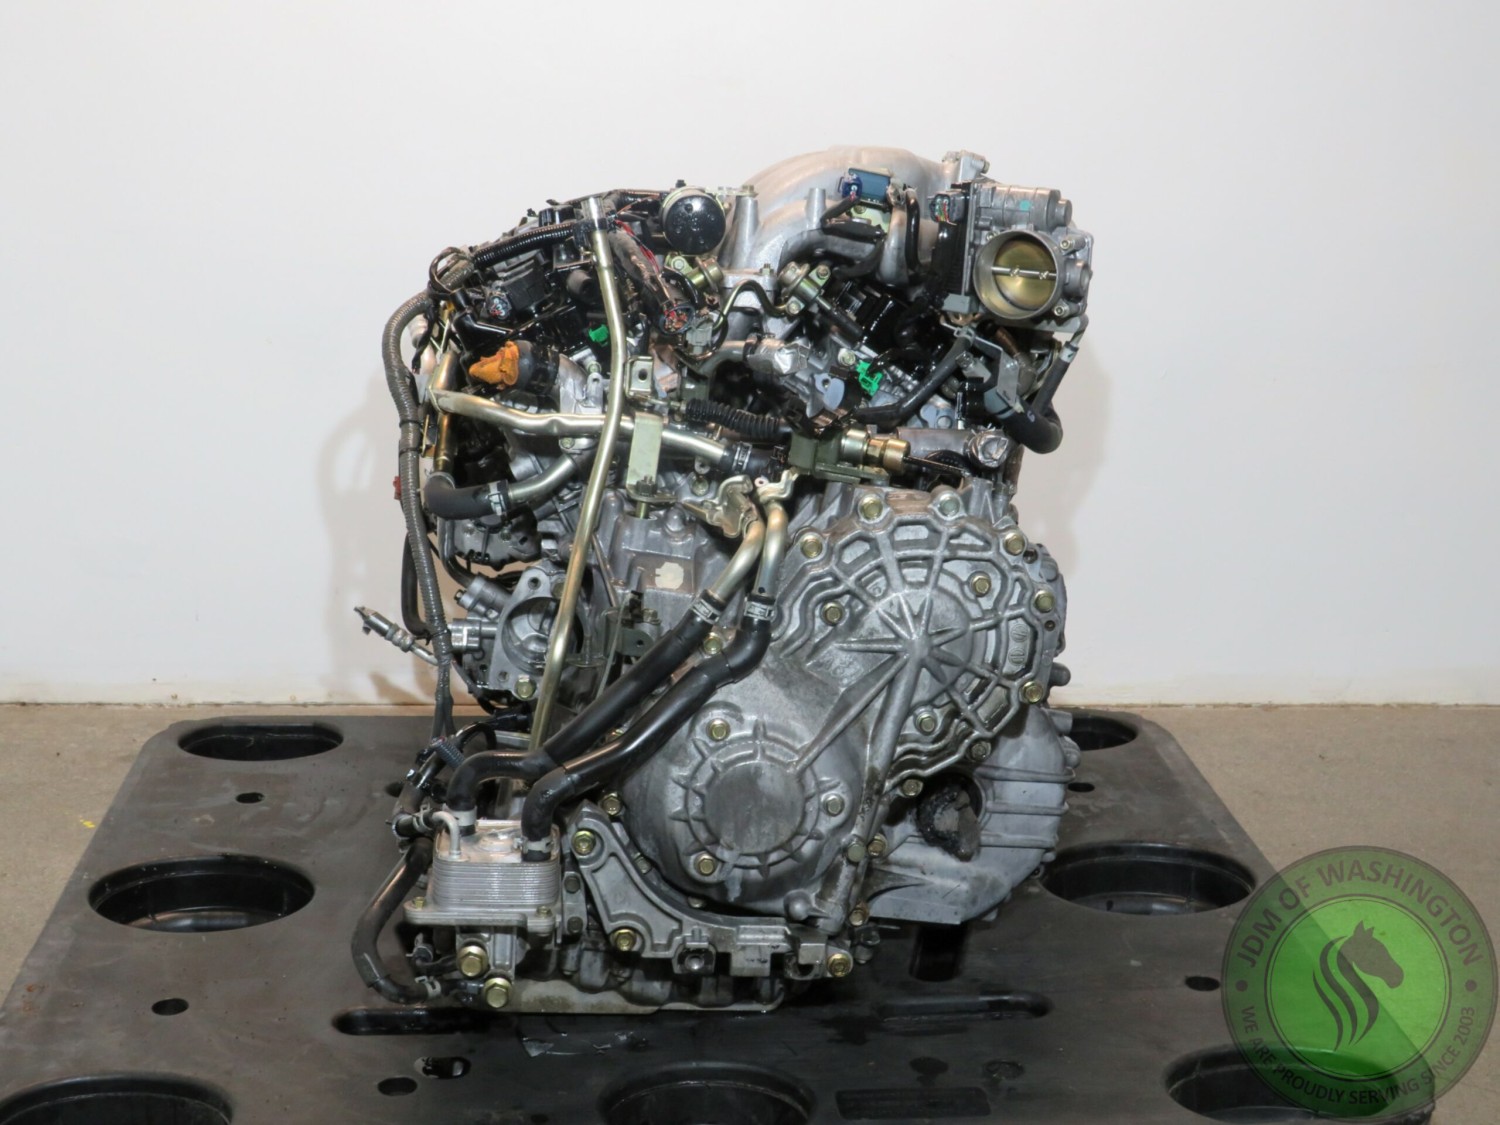 2003-2007 JDM NISSAN MURANO QUEST MAXIMA VQ35DE 3.5L V6 ENGINE